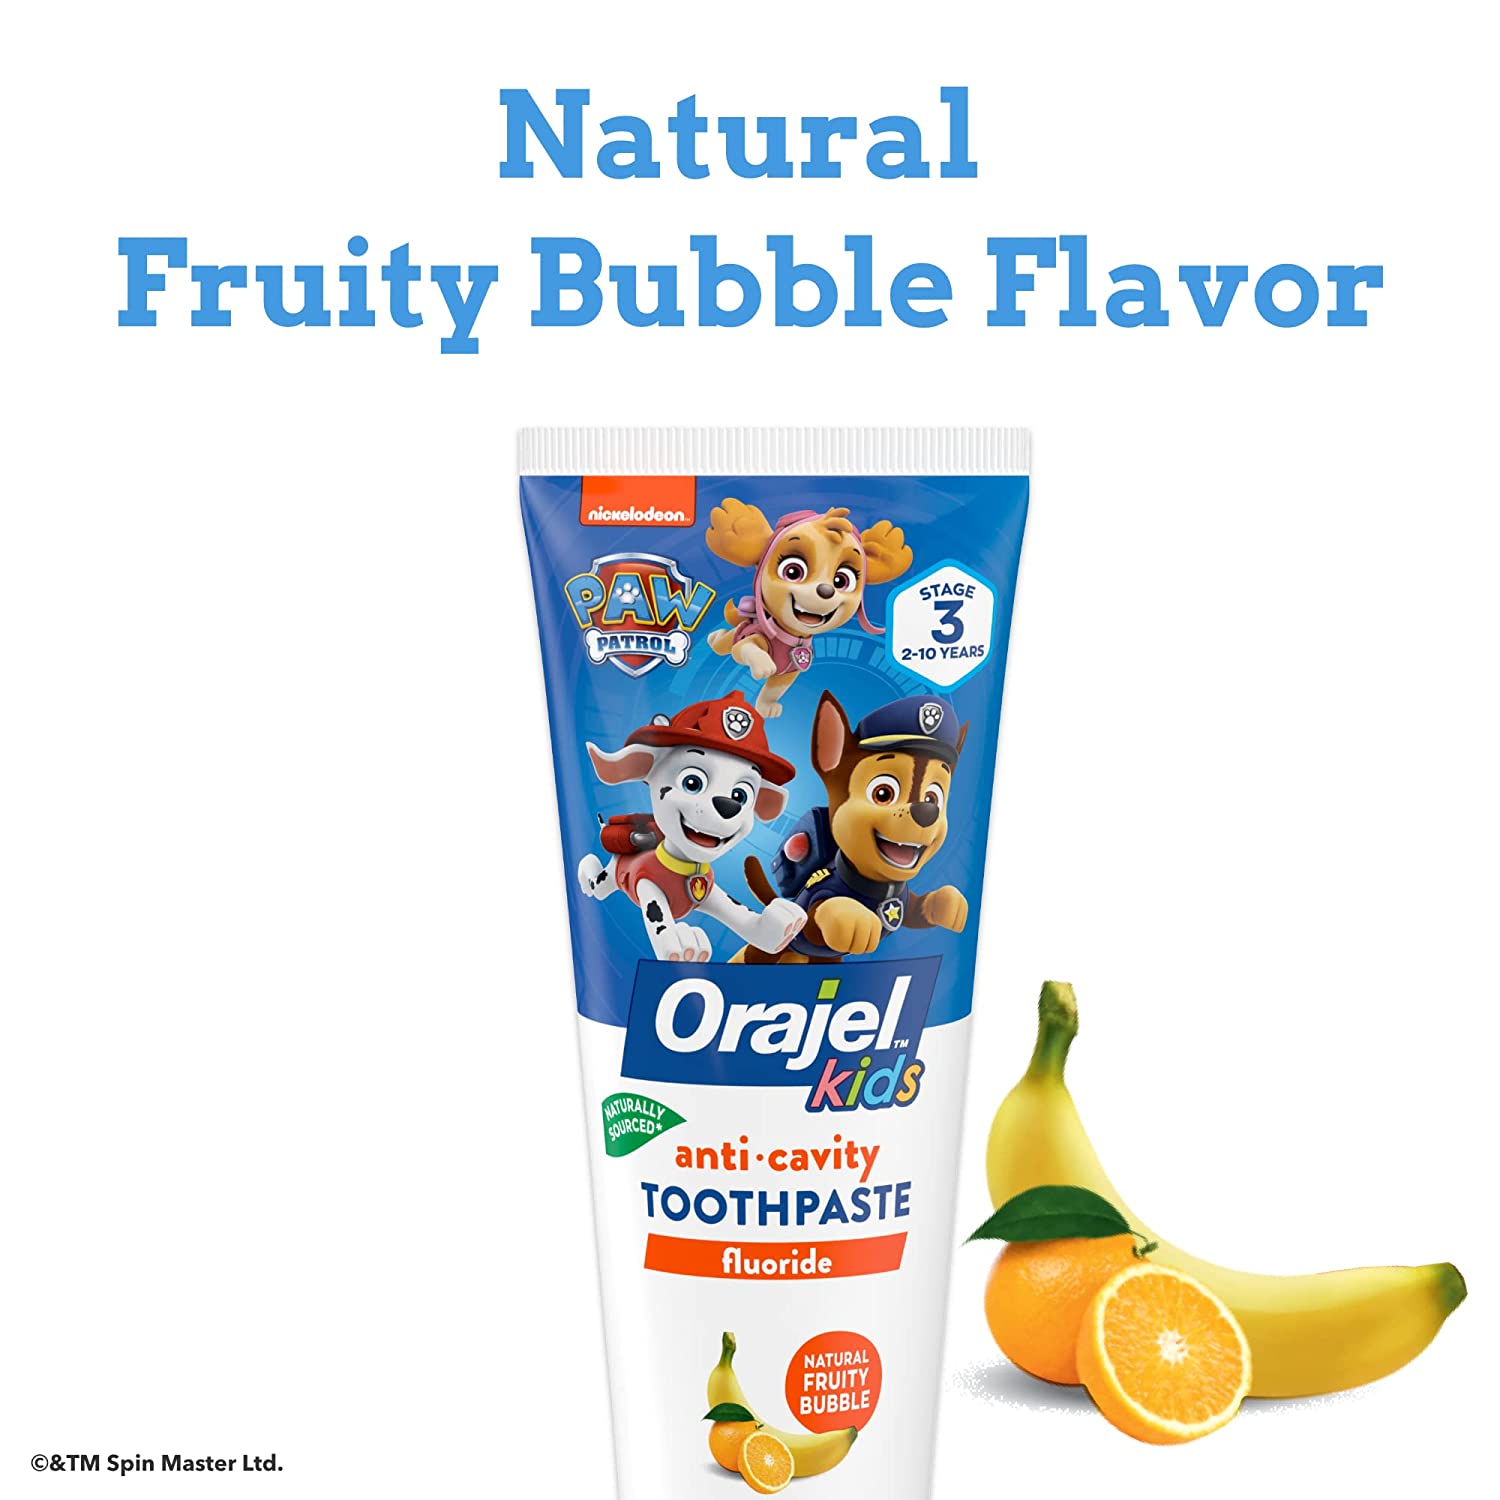 Orajel Kids Paw Patrol Anti-Cavity Fluoride Toothpaste, Natural Fruity Bubble Flavor, 4.2oz Tube $5.79